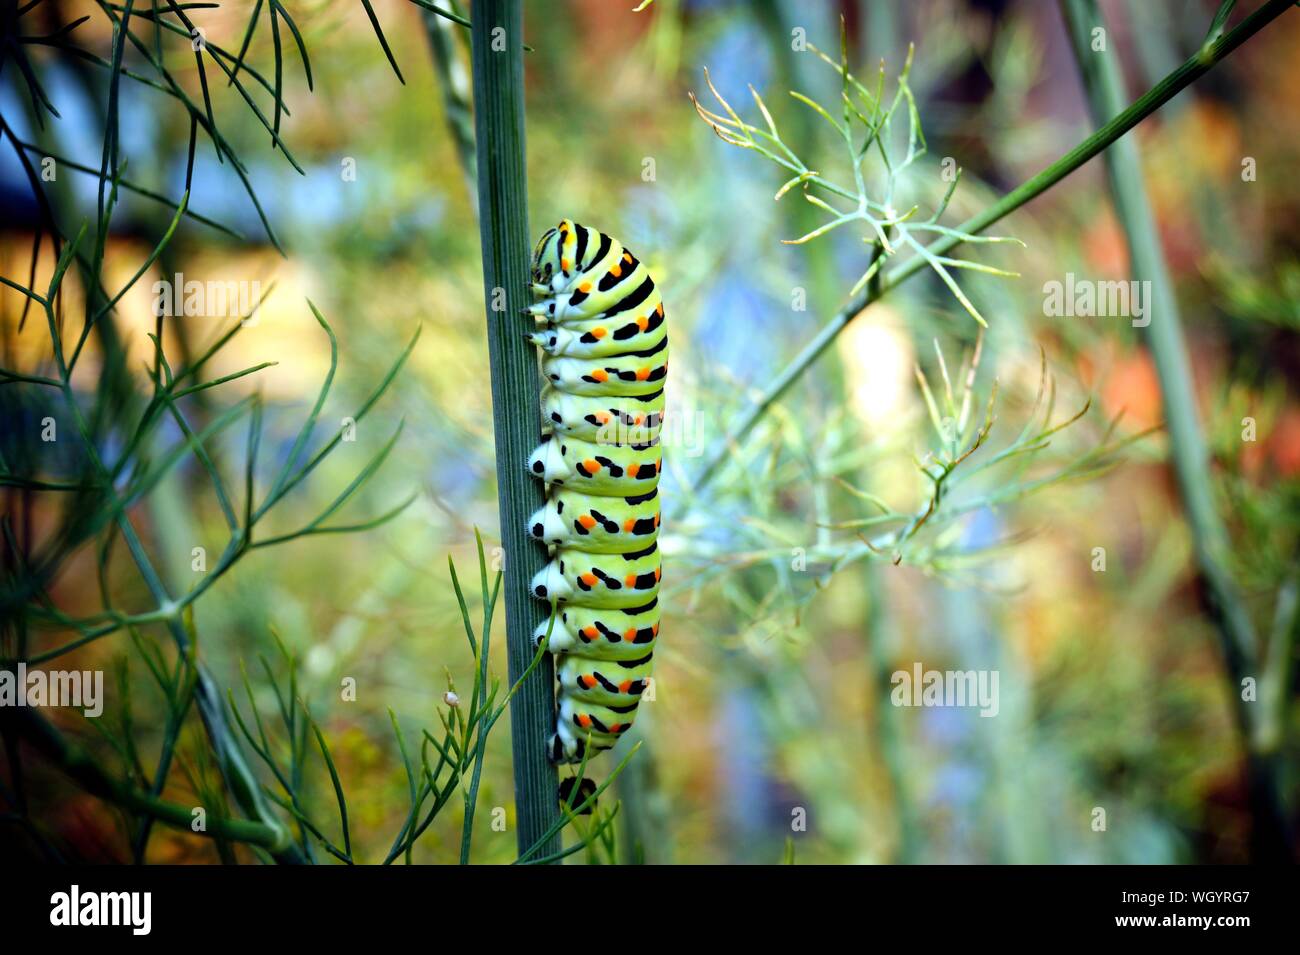 caterpillar of a swallowtail Papilio machaon on fresh green fragrant dill Anethum graveolens in the garden. Garden plant. Caterpillar feeding on dill. Stock Photo